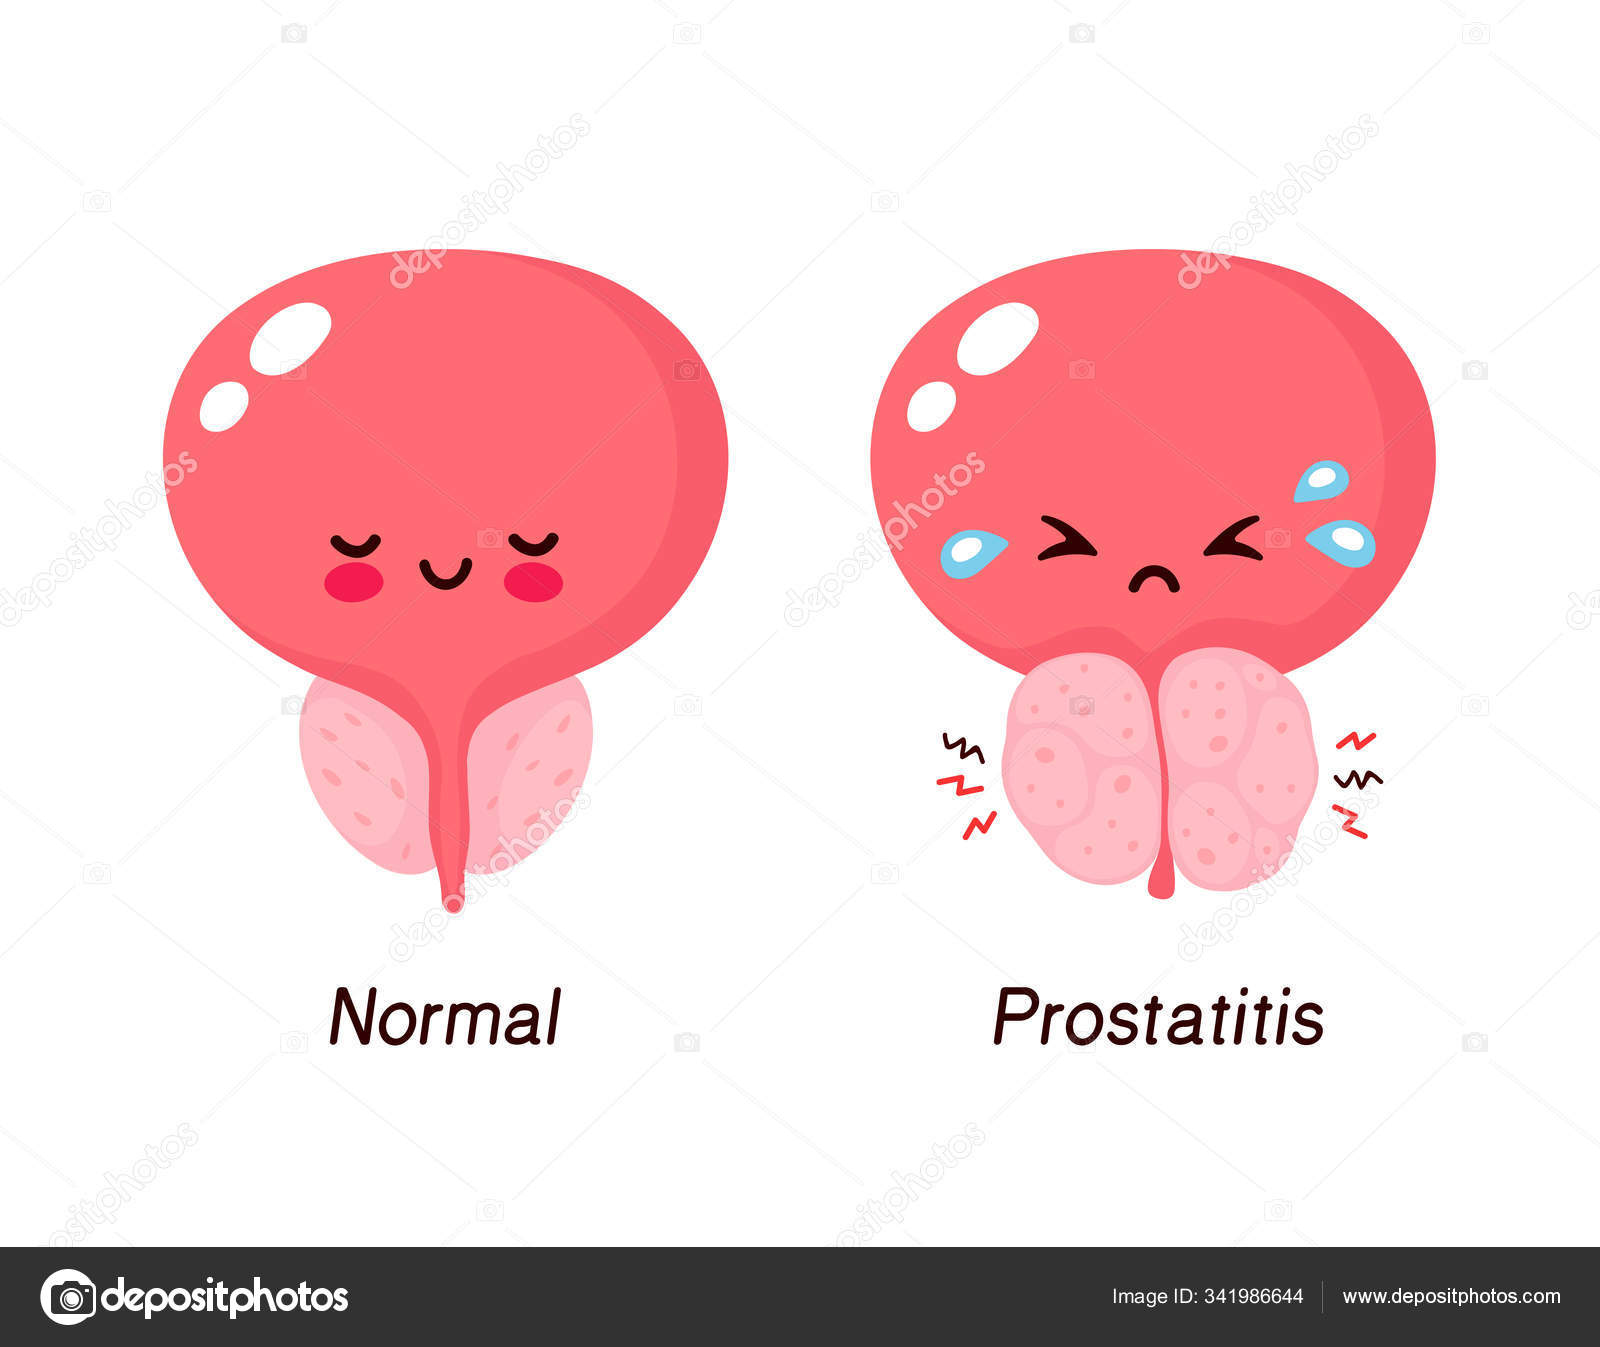 Prostatitis és jóindulatú - ladikauto.hu